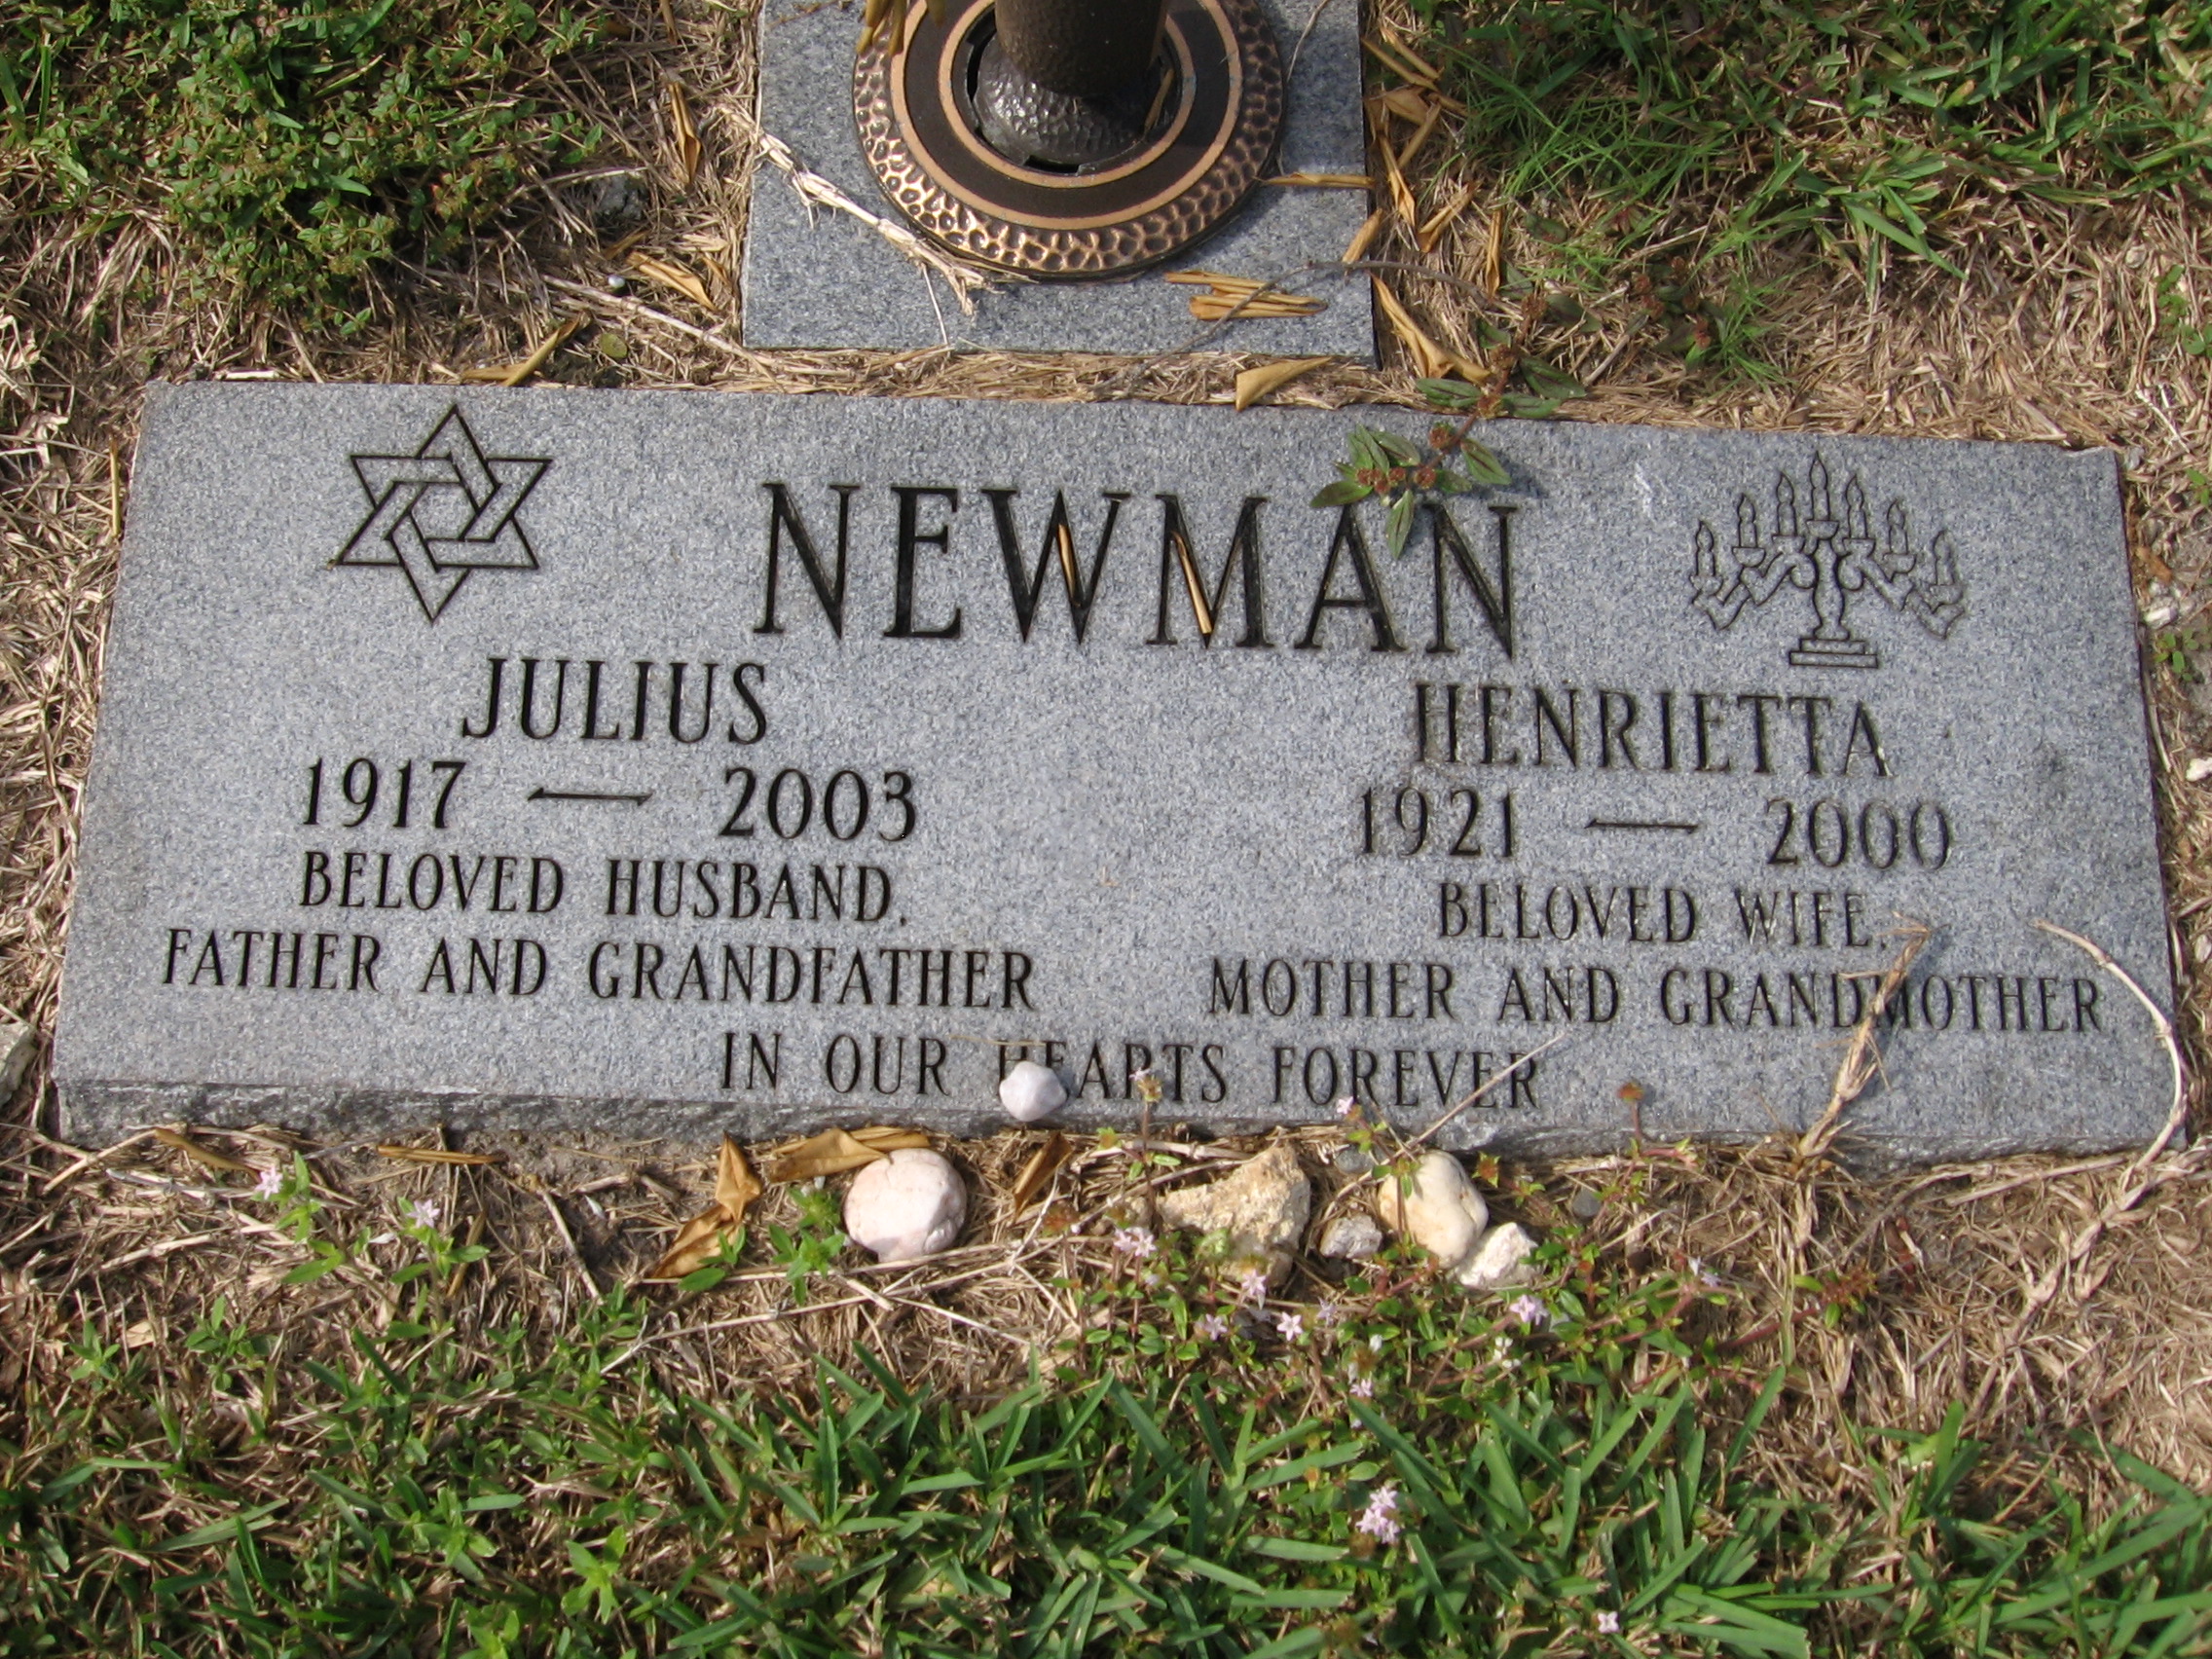 Julius Newman